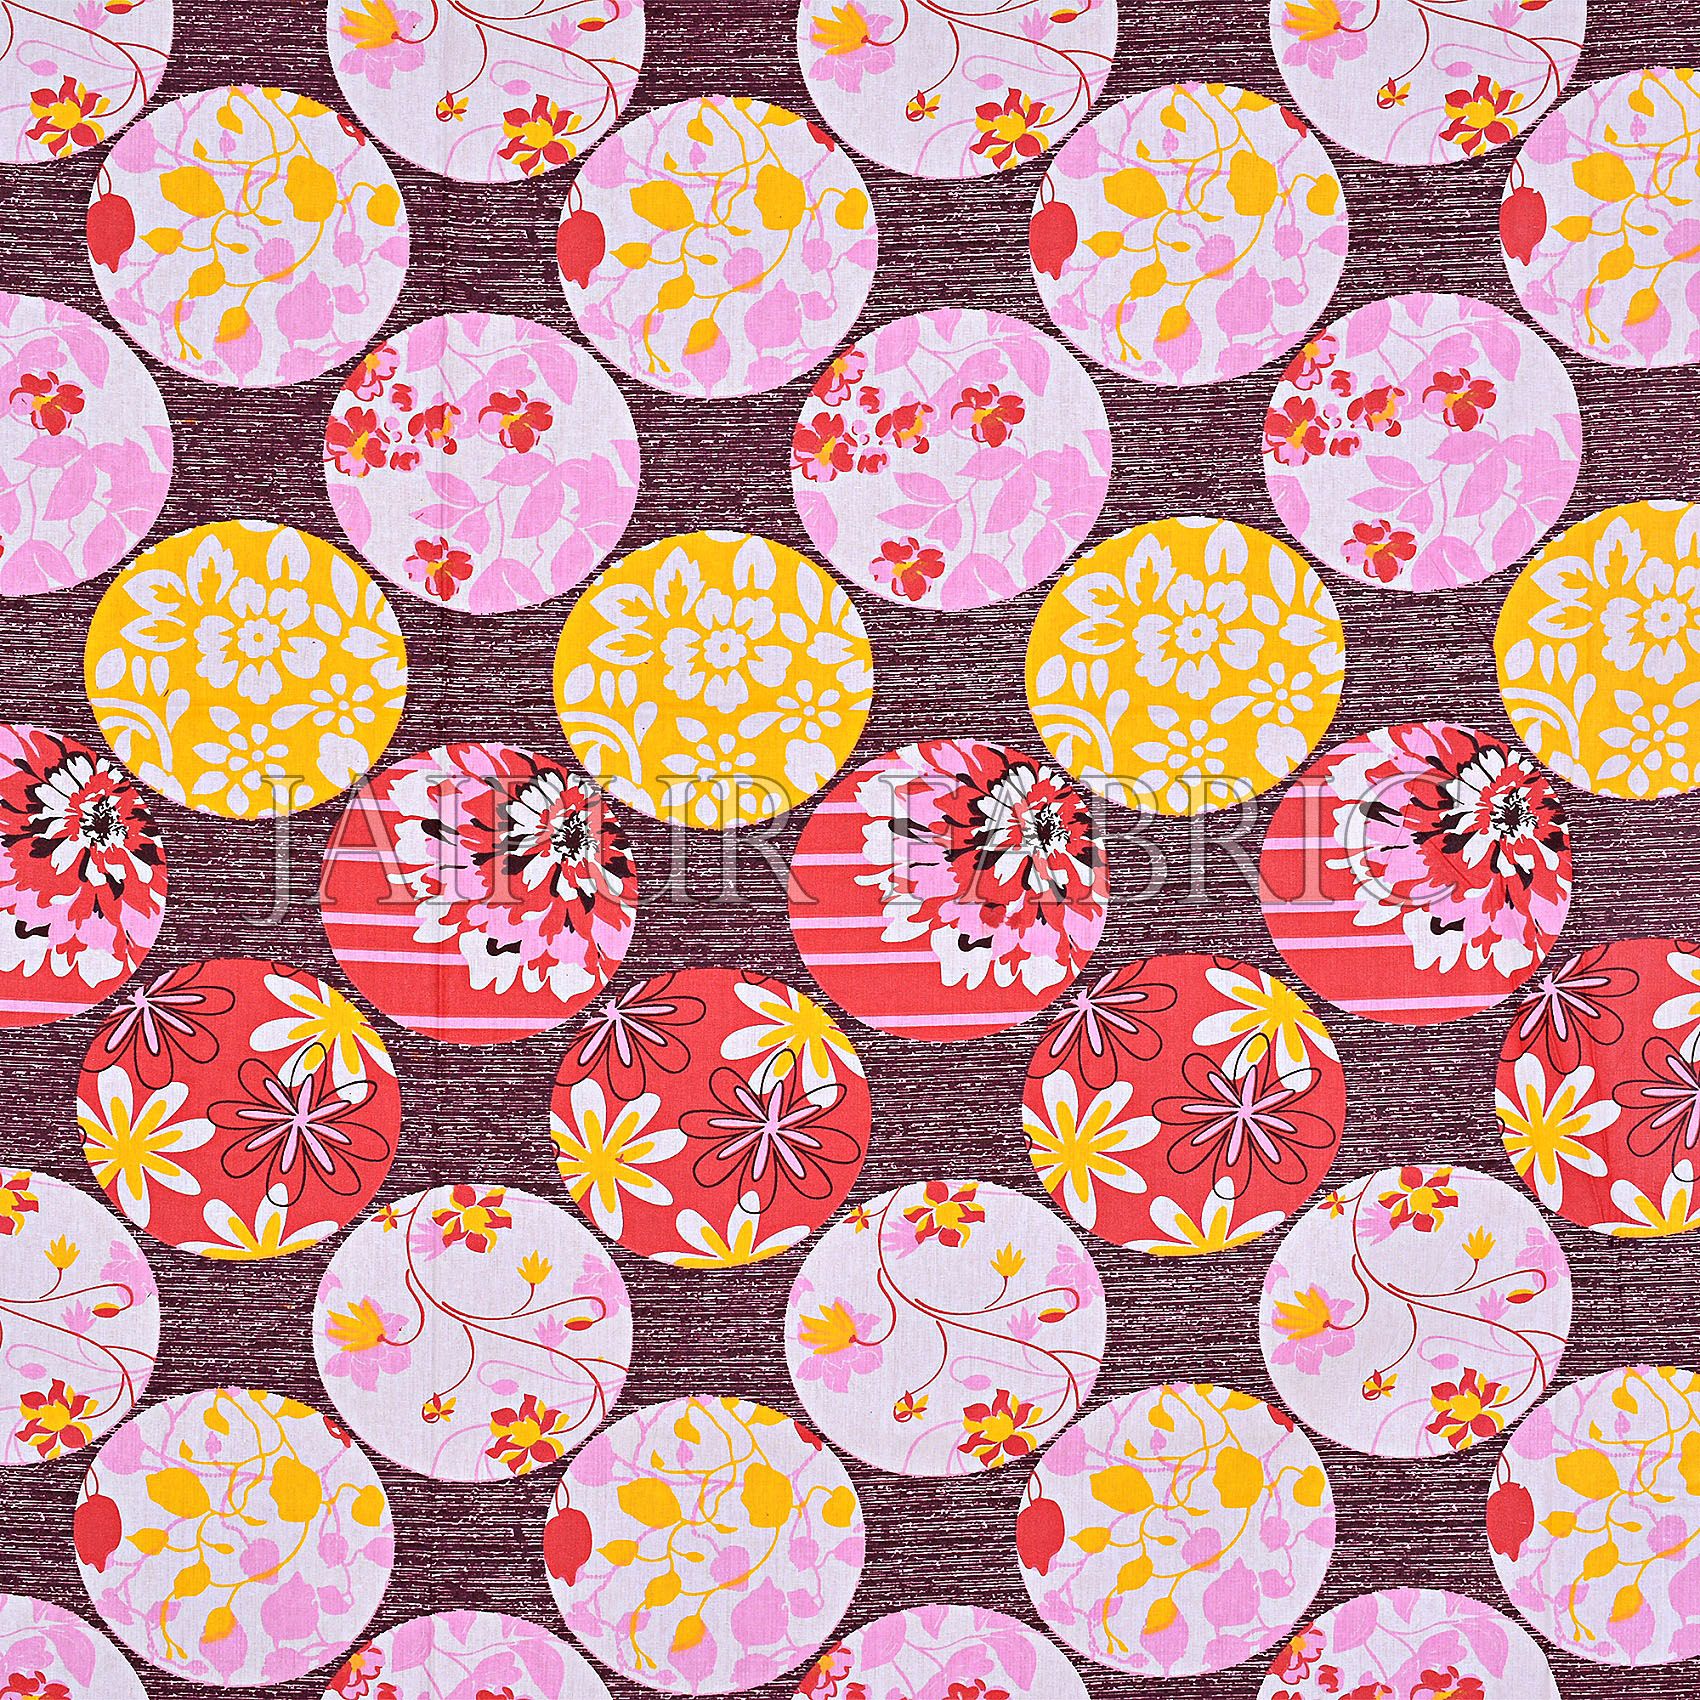 Rose Beige Circle Polka Dot Pattern Cotton Double Bed Sheet